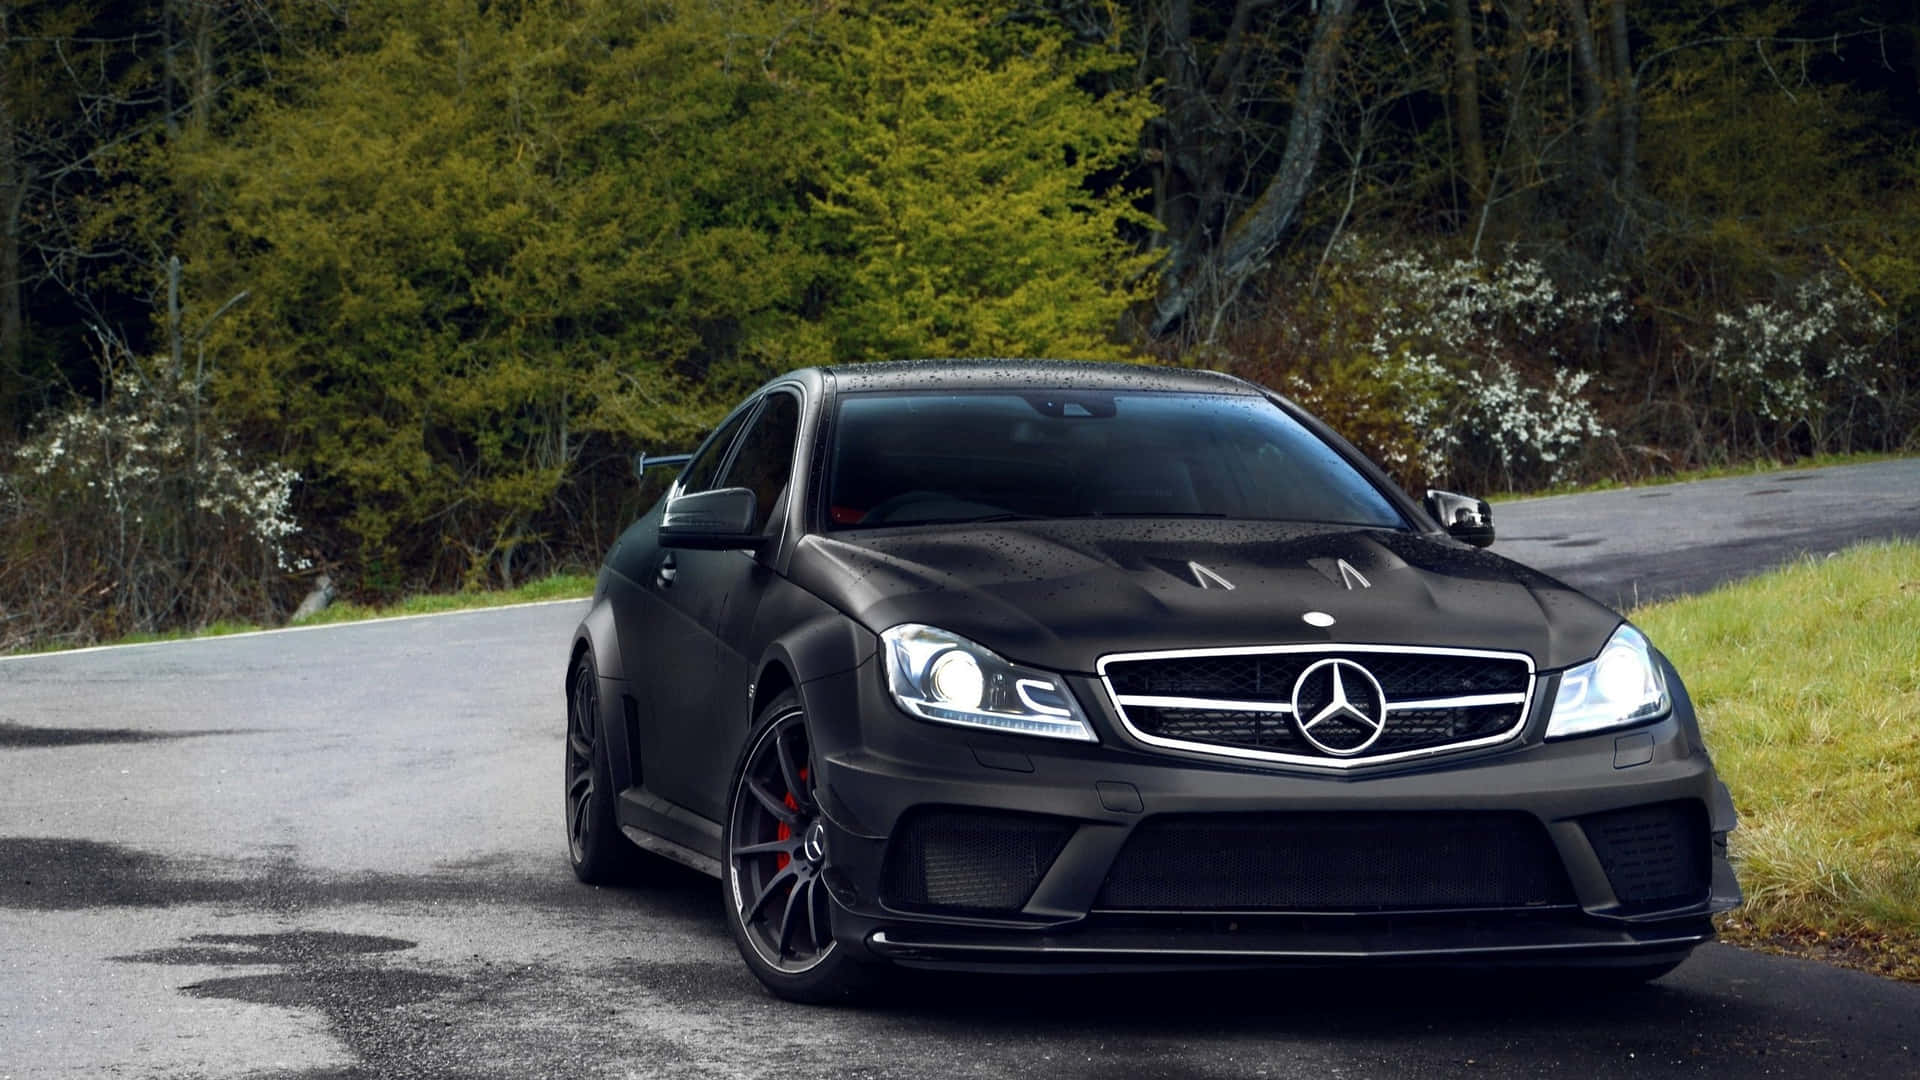 Expensive Black Mercedes Parked